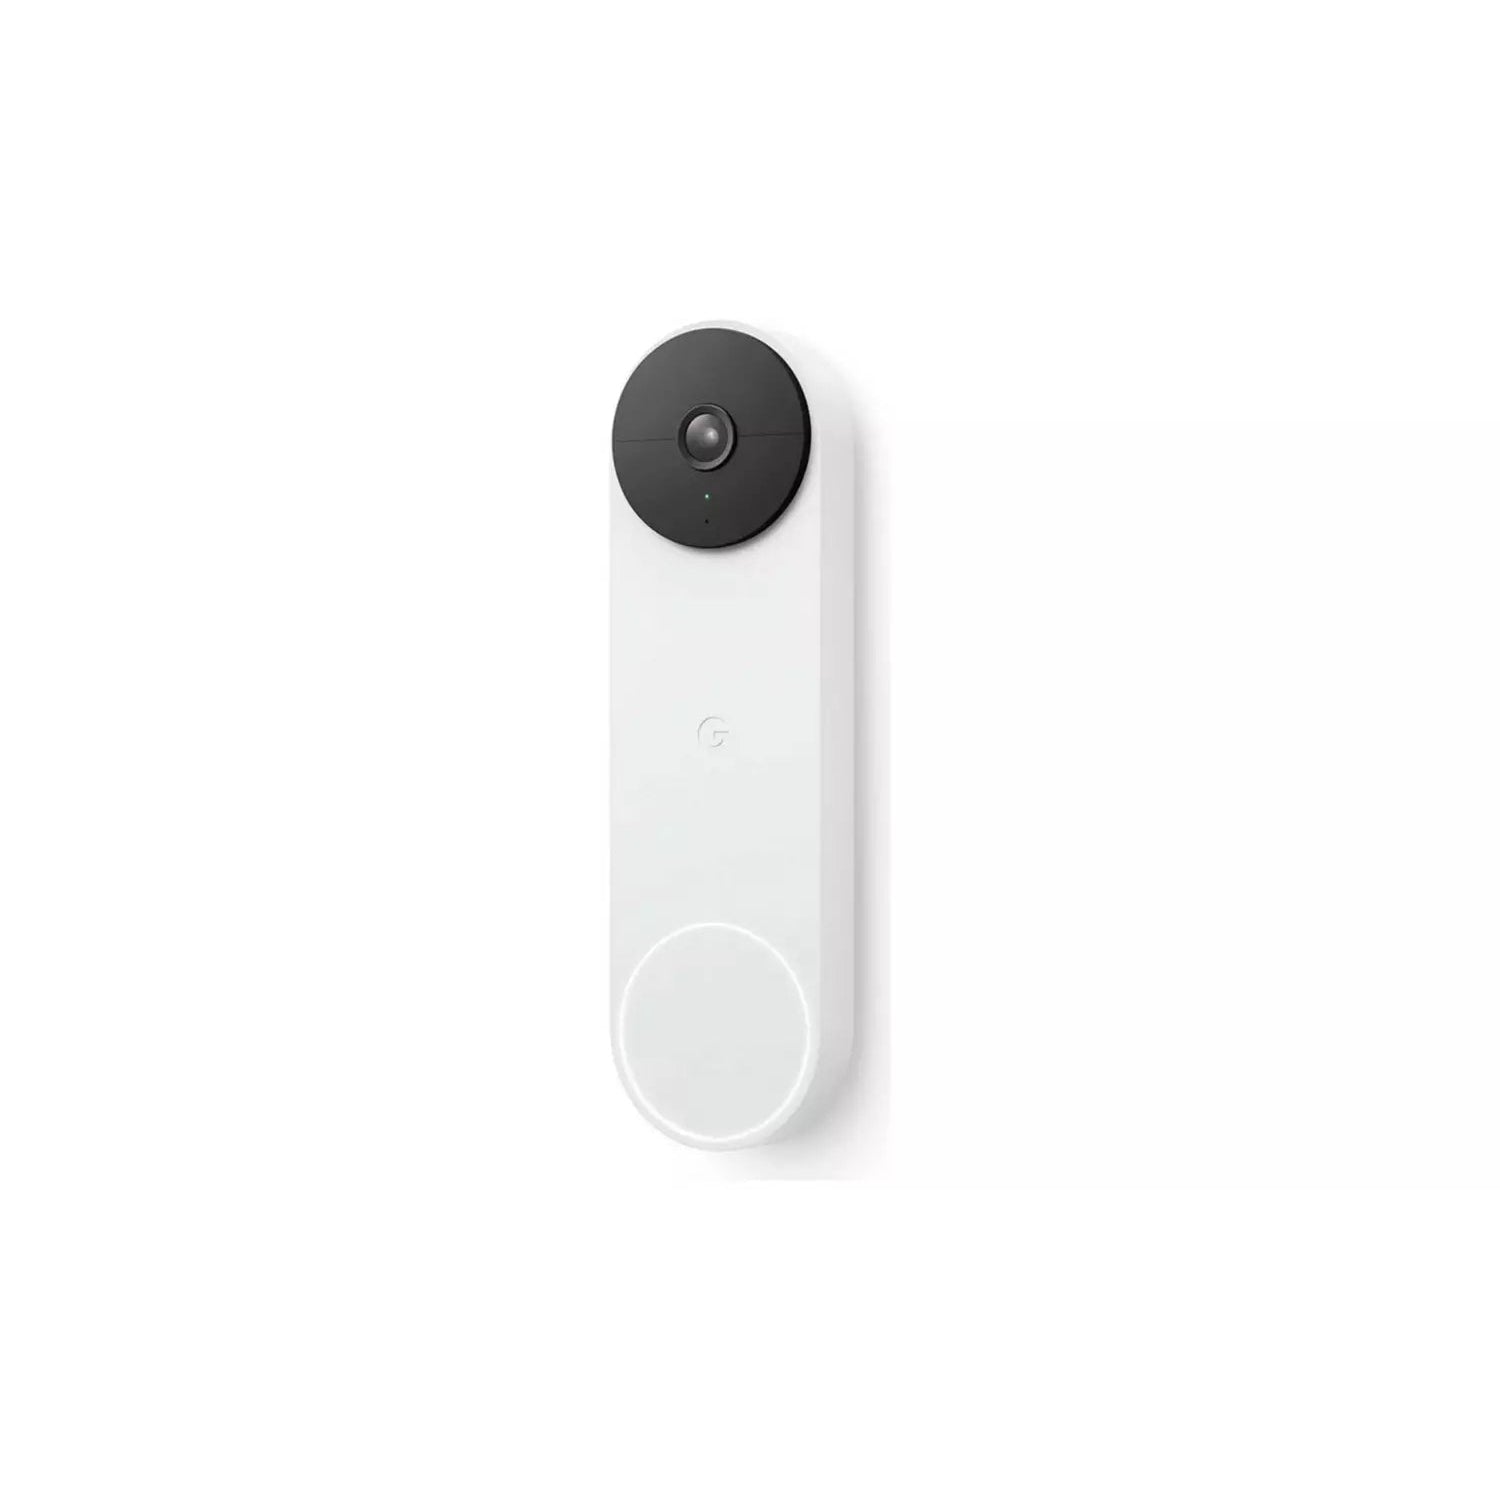 Google Nest Video Doorbell (Battery) - Refurbished Pristine